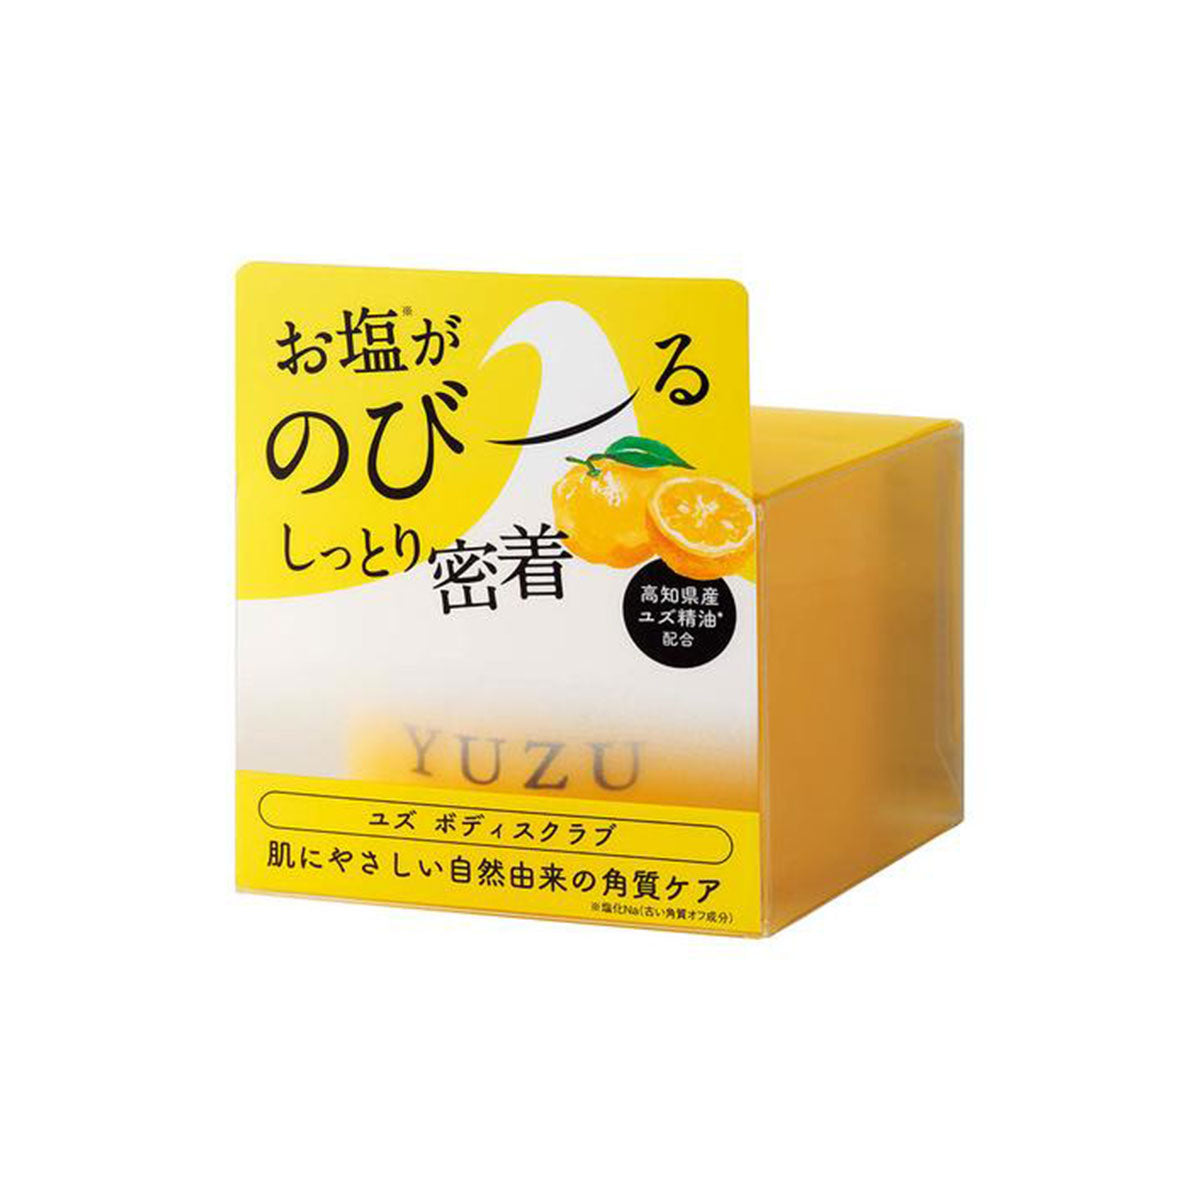 DAILY AROMA柚子身体磨砂膏 300g